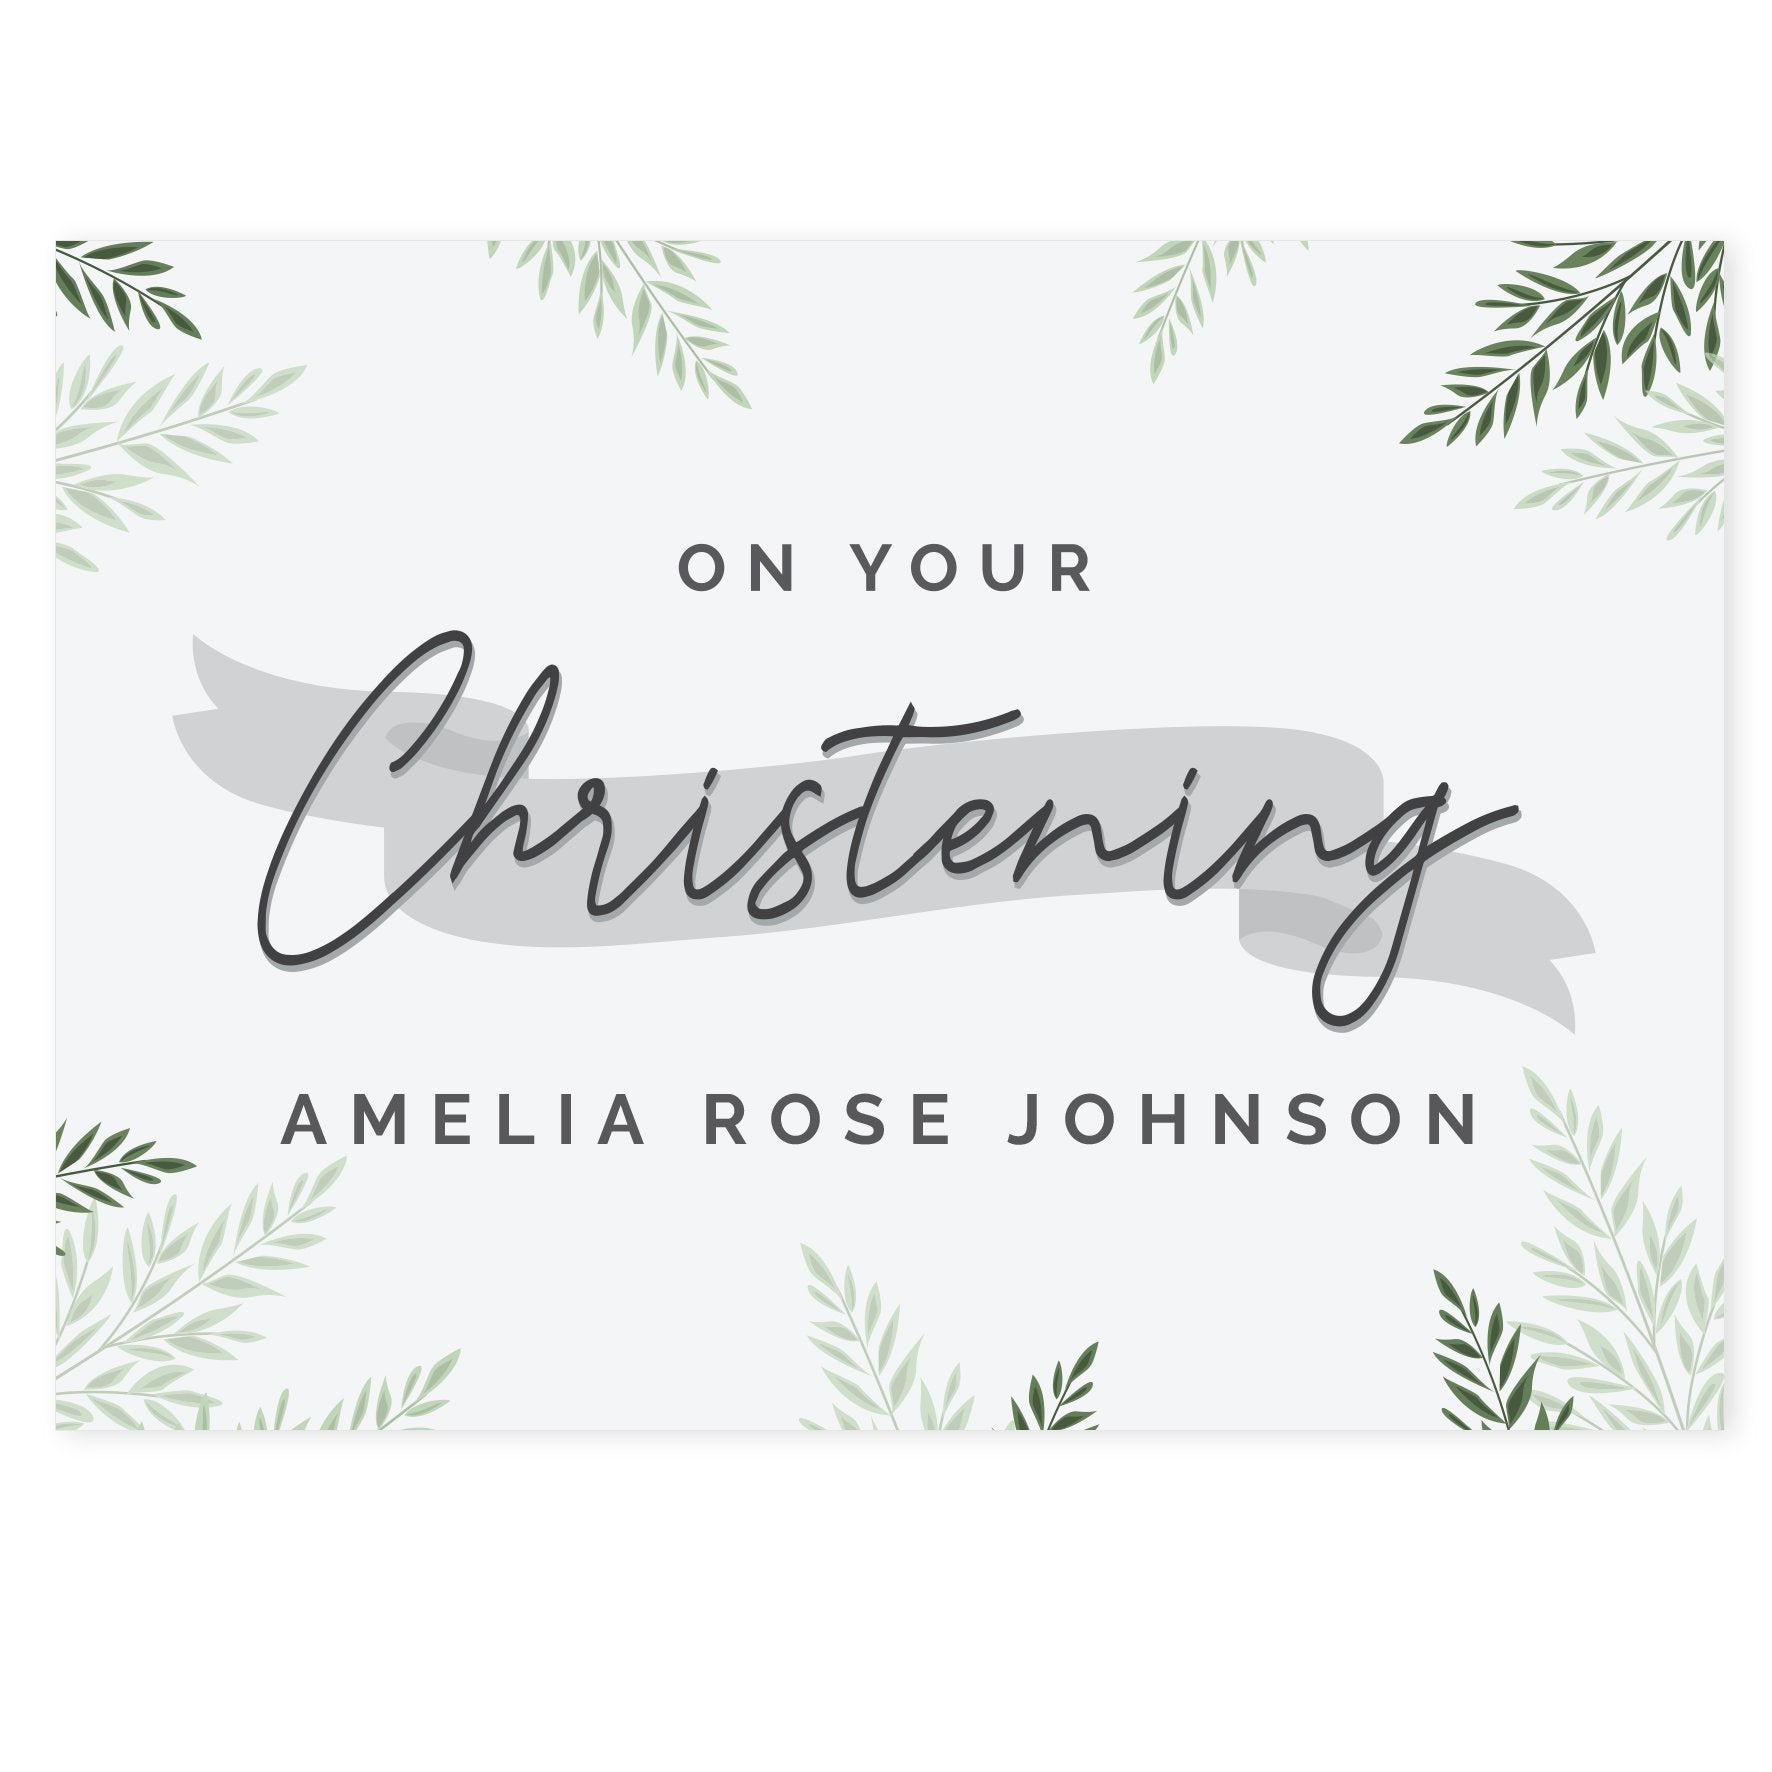 Personalised Christening Card